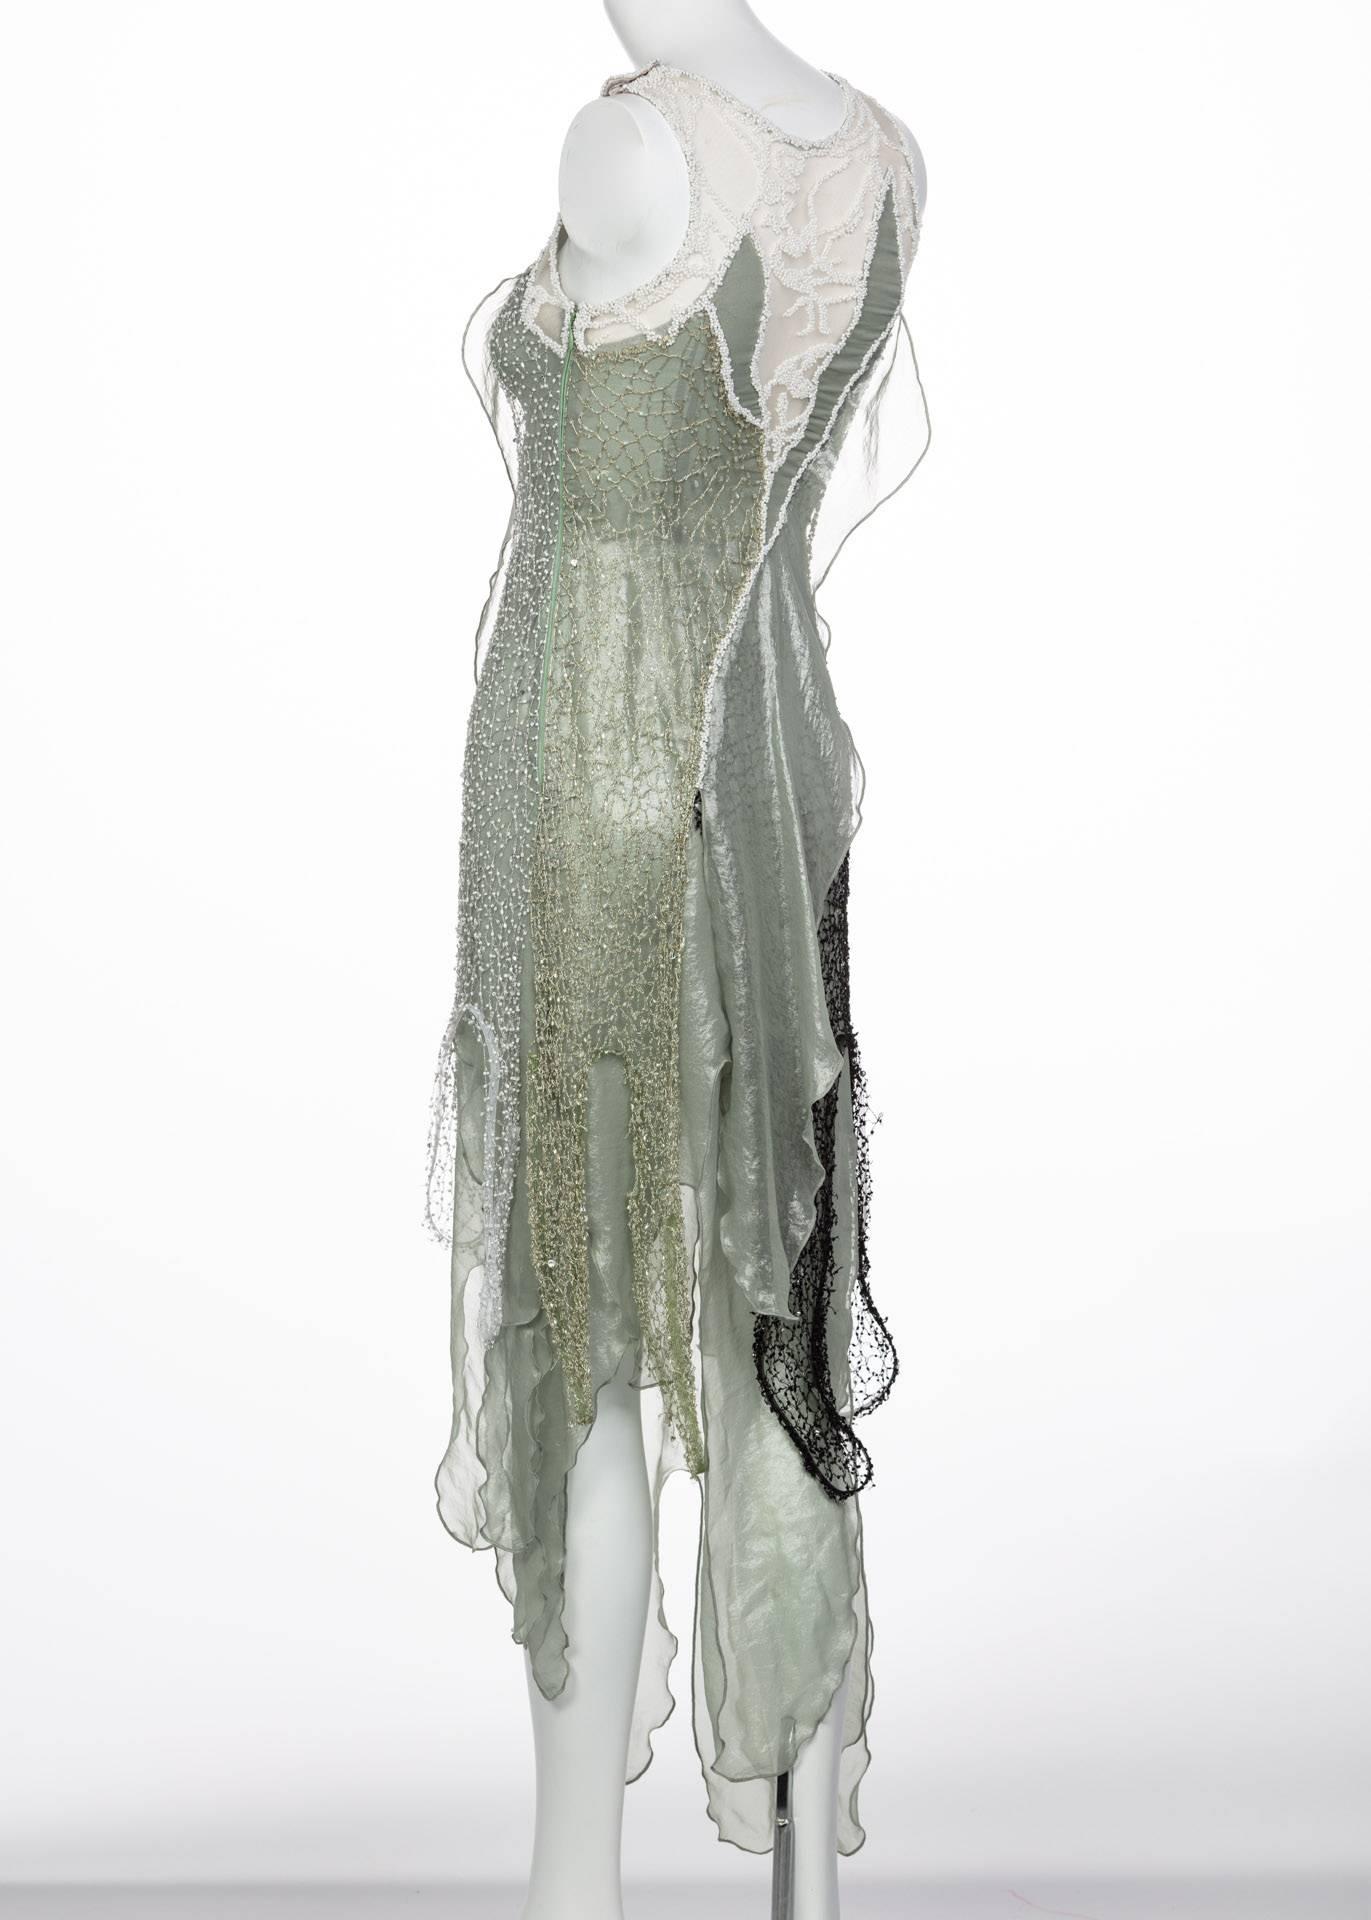 Rodarte Runway Beaded Metal Net SeaFoam Lame Swarovski Crystals Dress, 2015  1